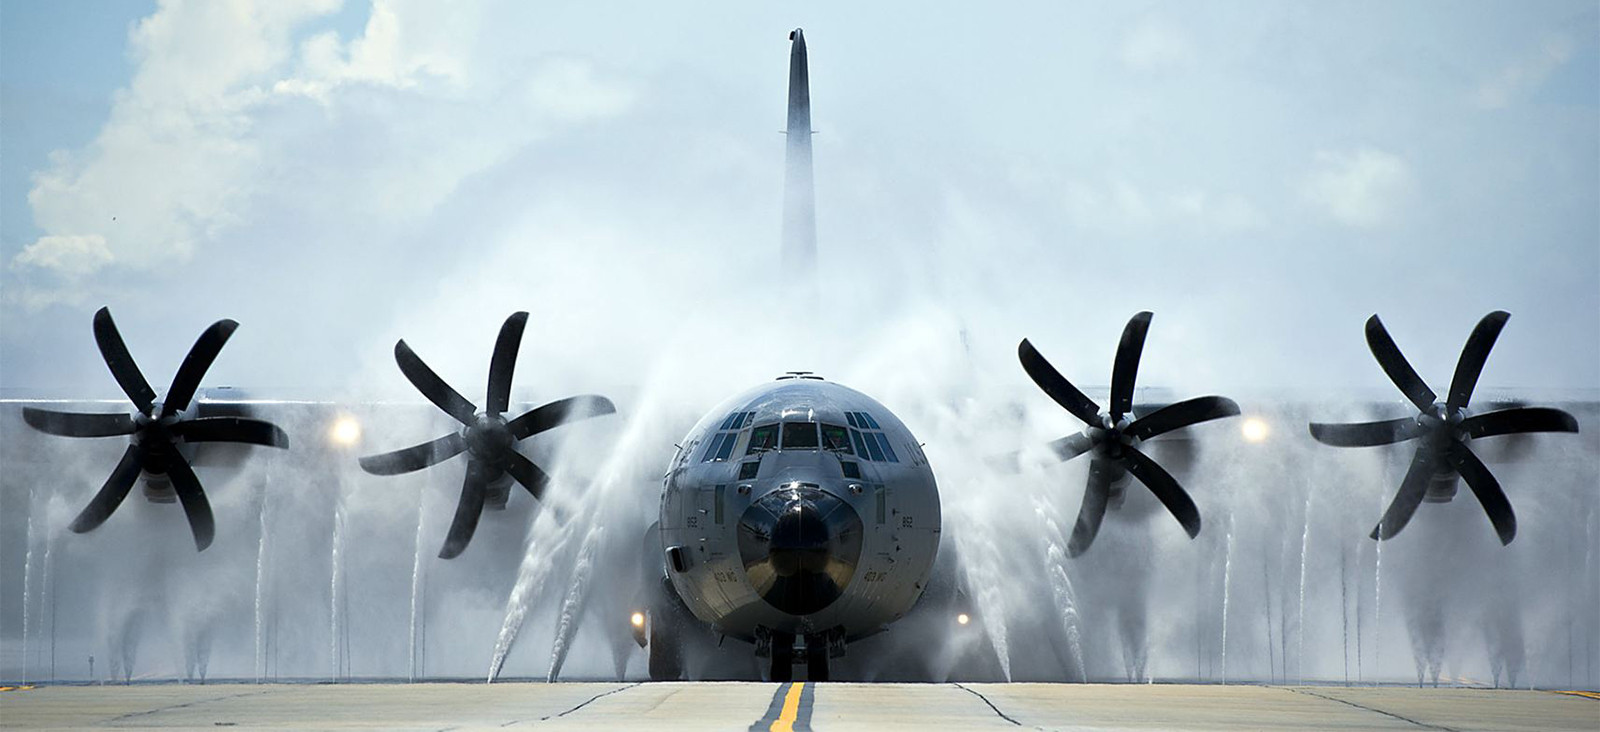 C-130 going through the car wash : aviation